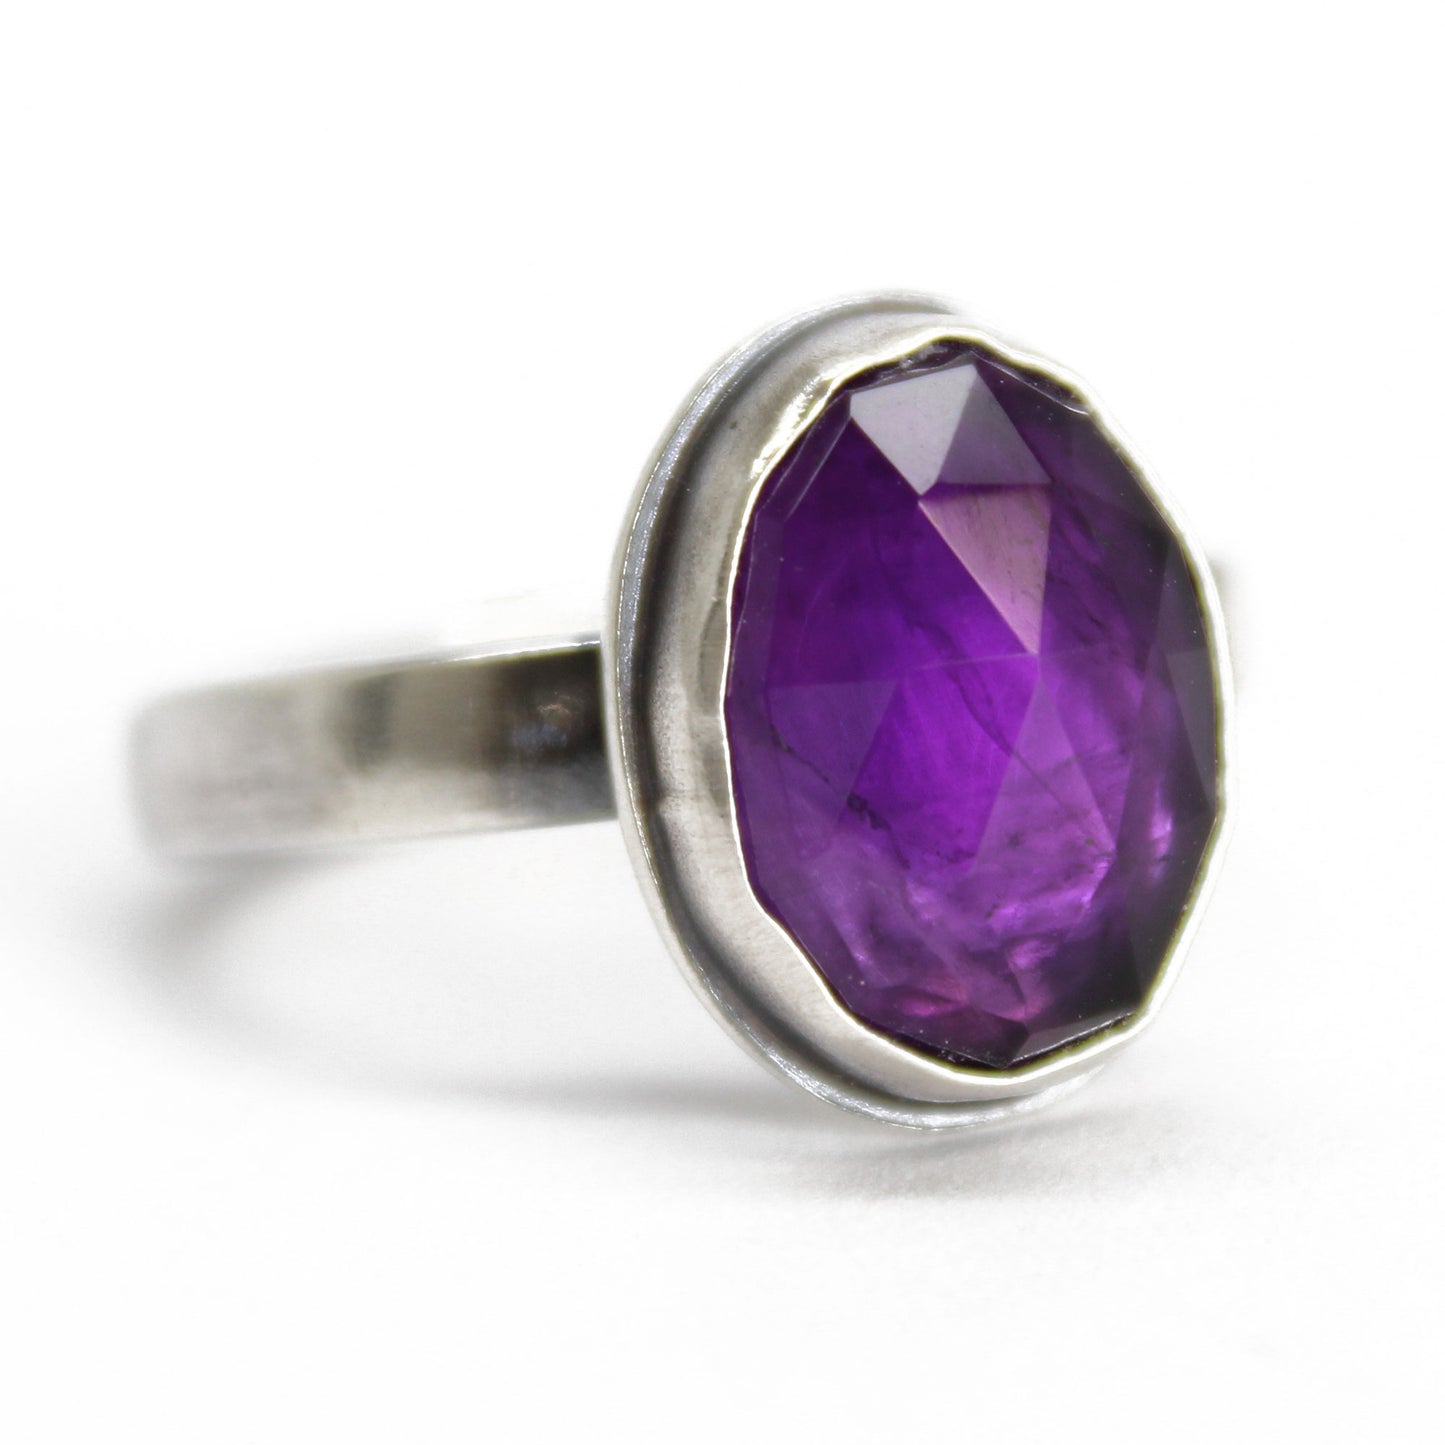 Purple Amethyst Ring in Sterling Silver, 7.75 US, Handmade